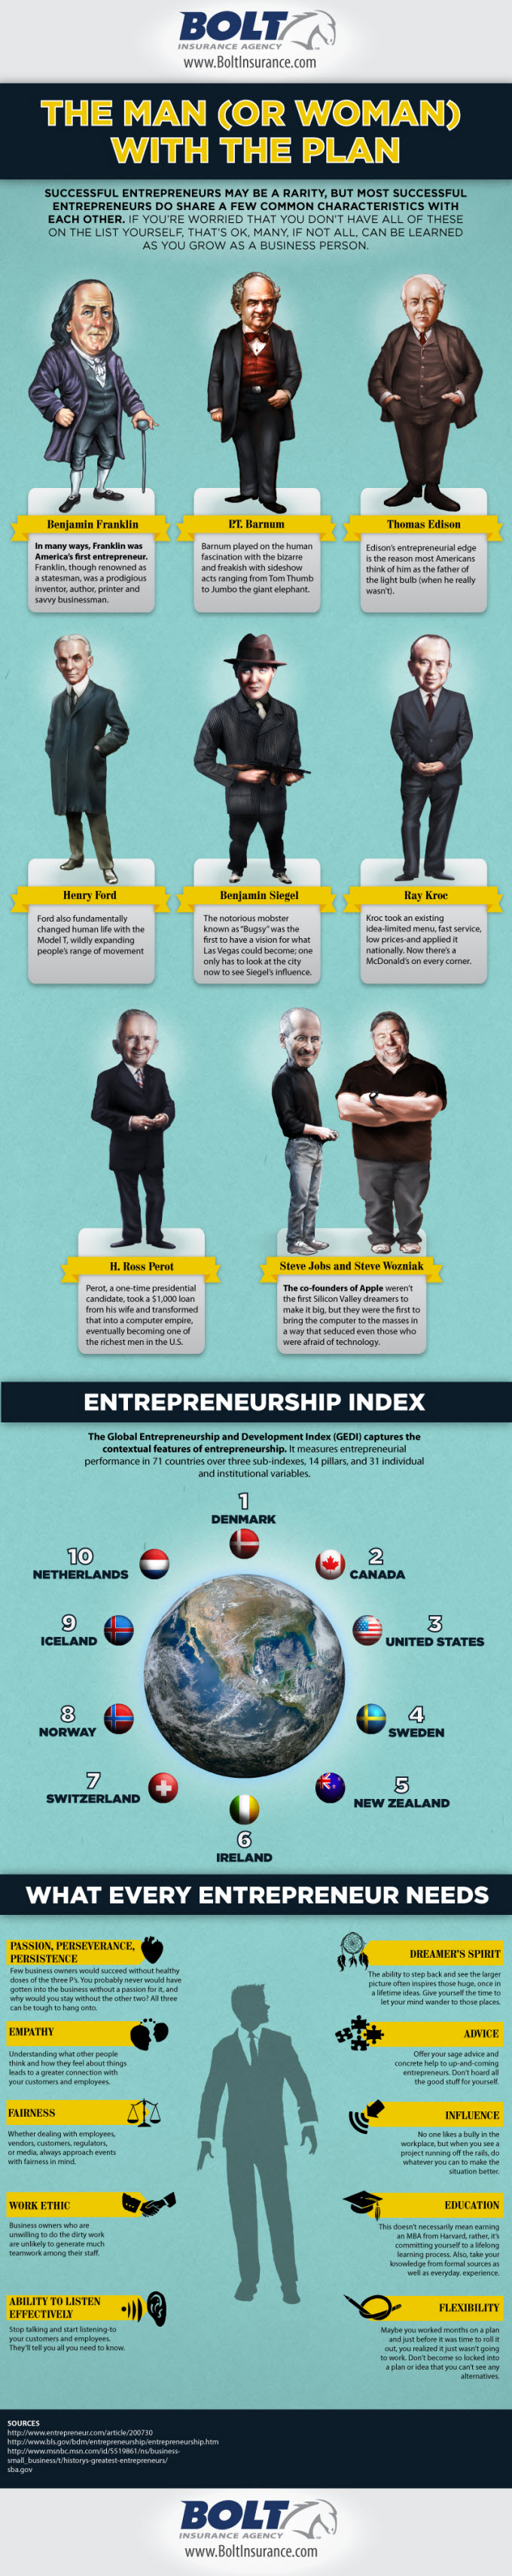 What Makes a Successful Entrepreneur?